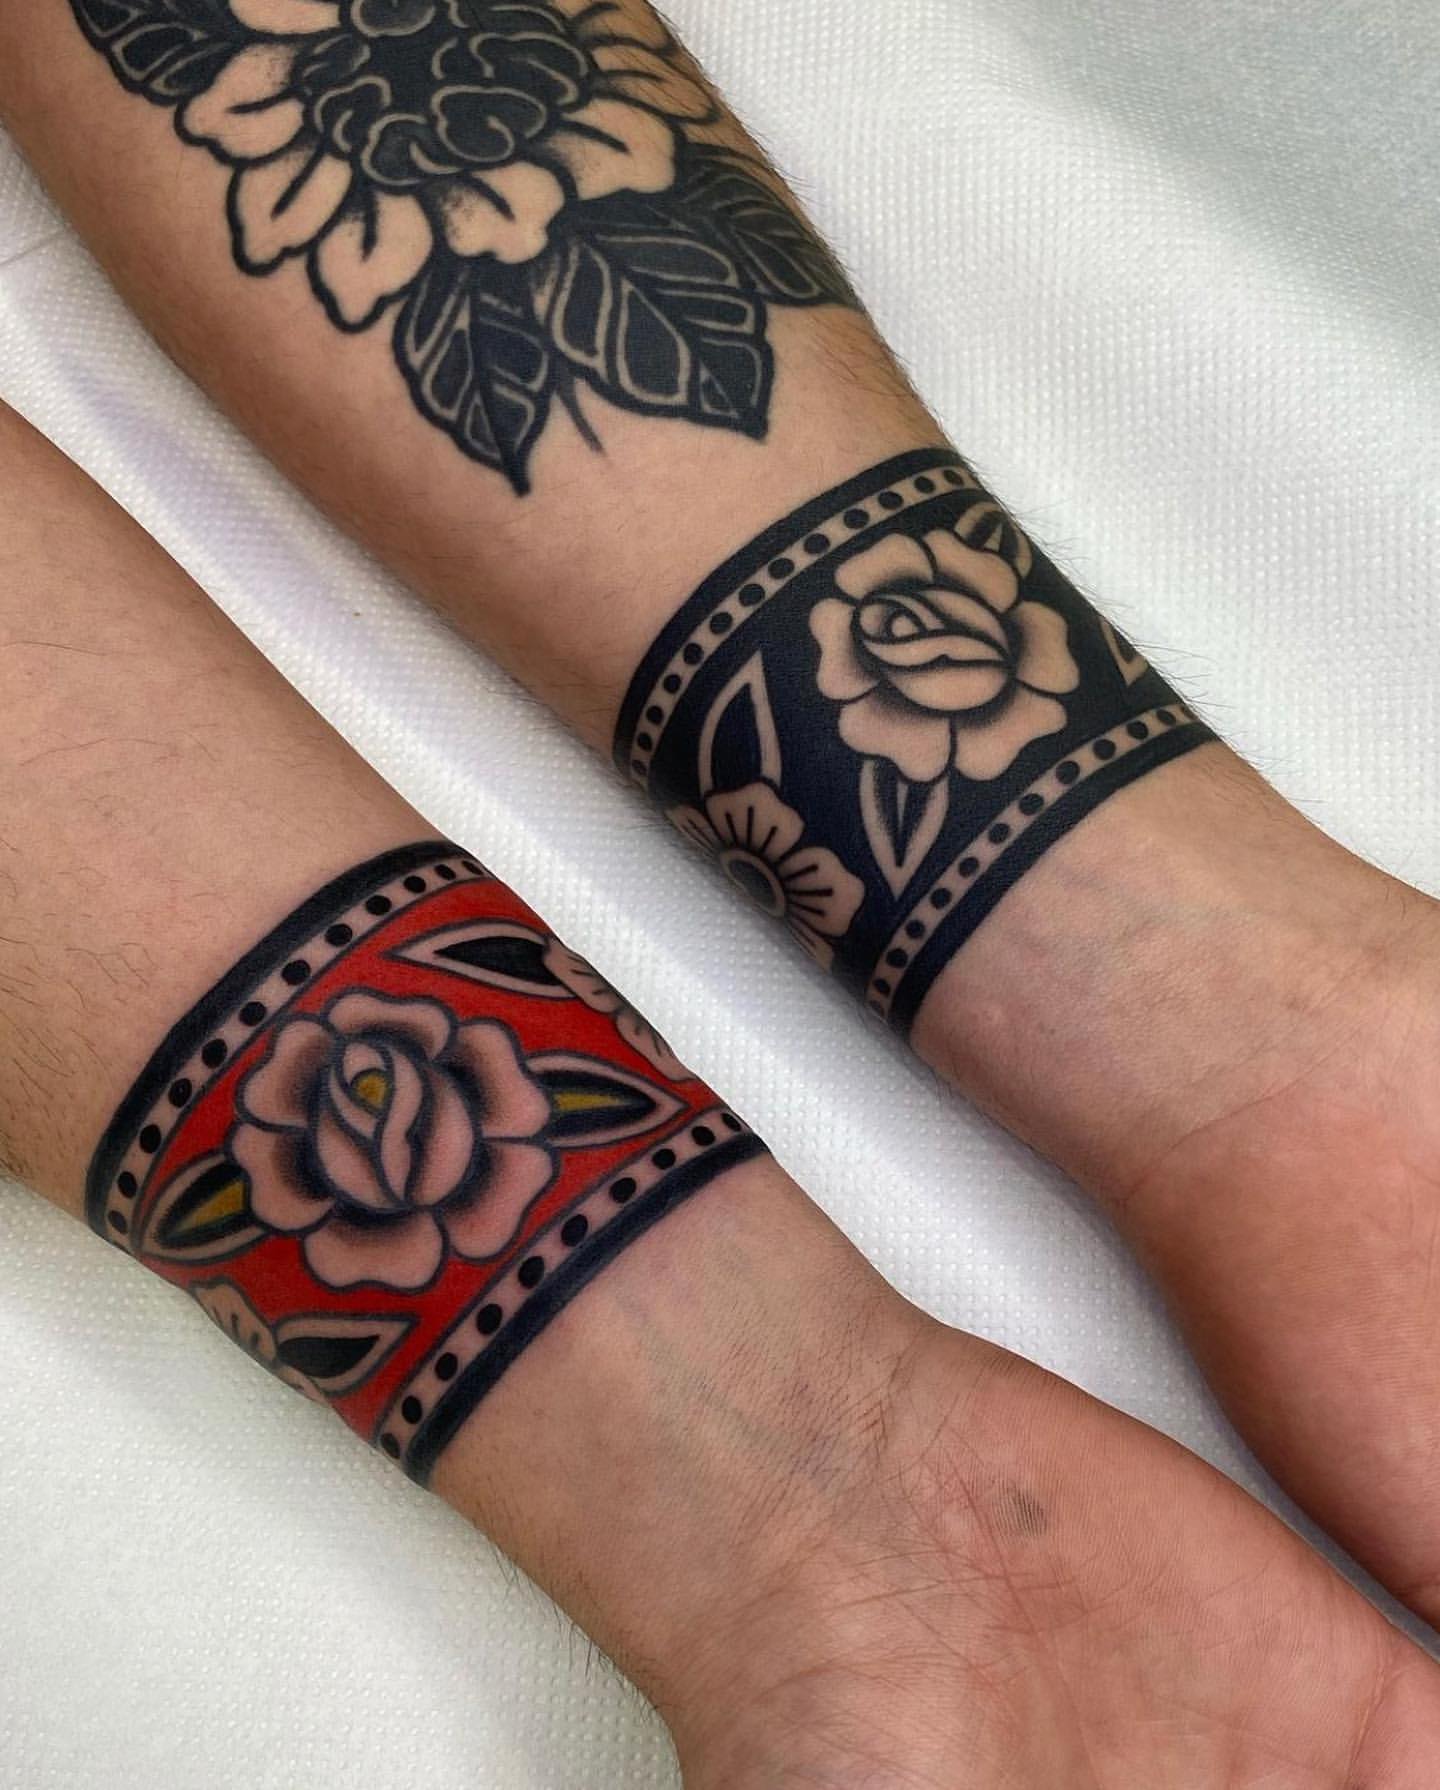 Armband Tattoo Ideas 17